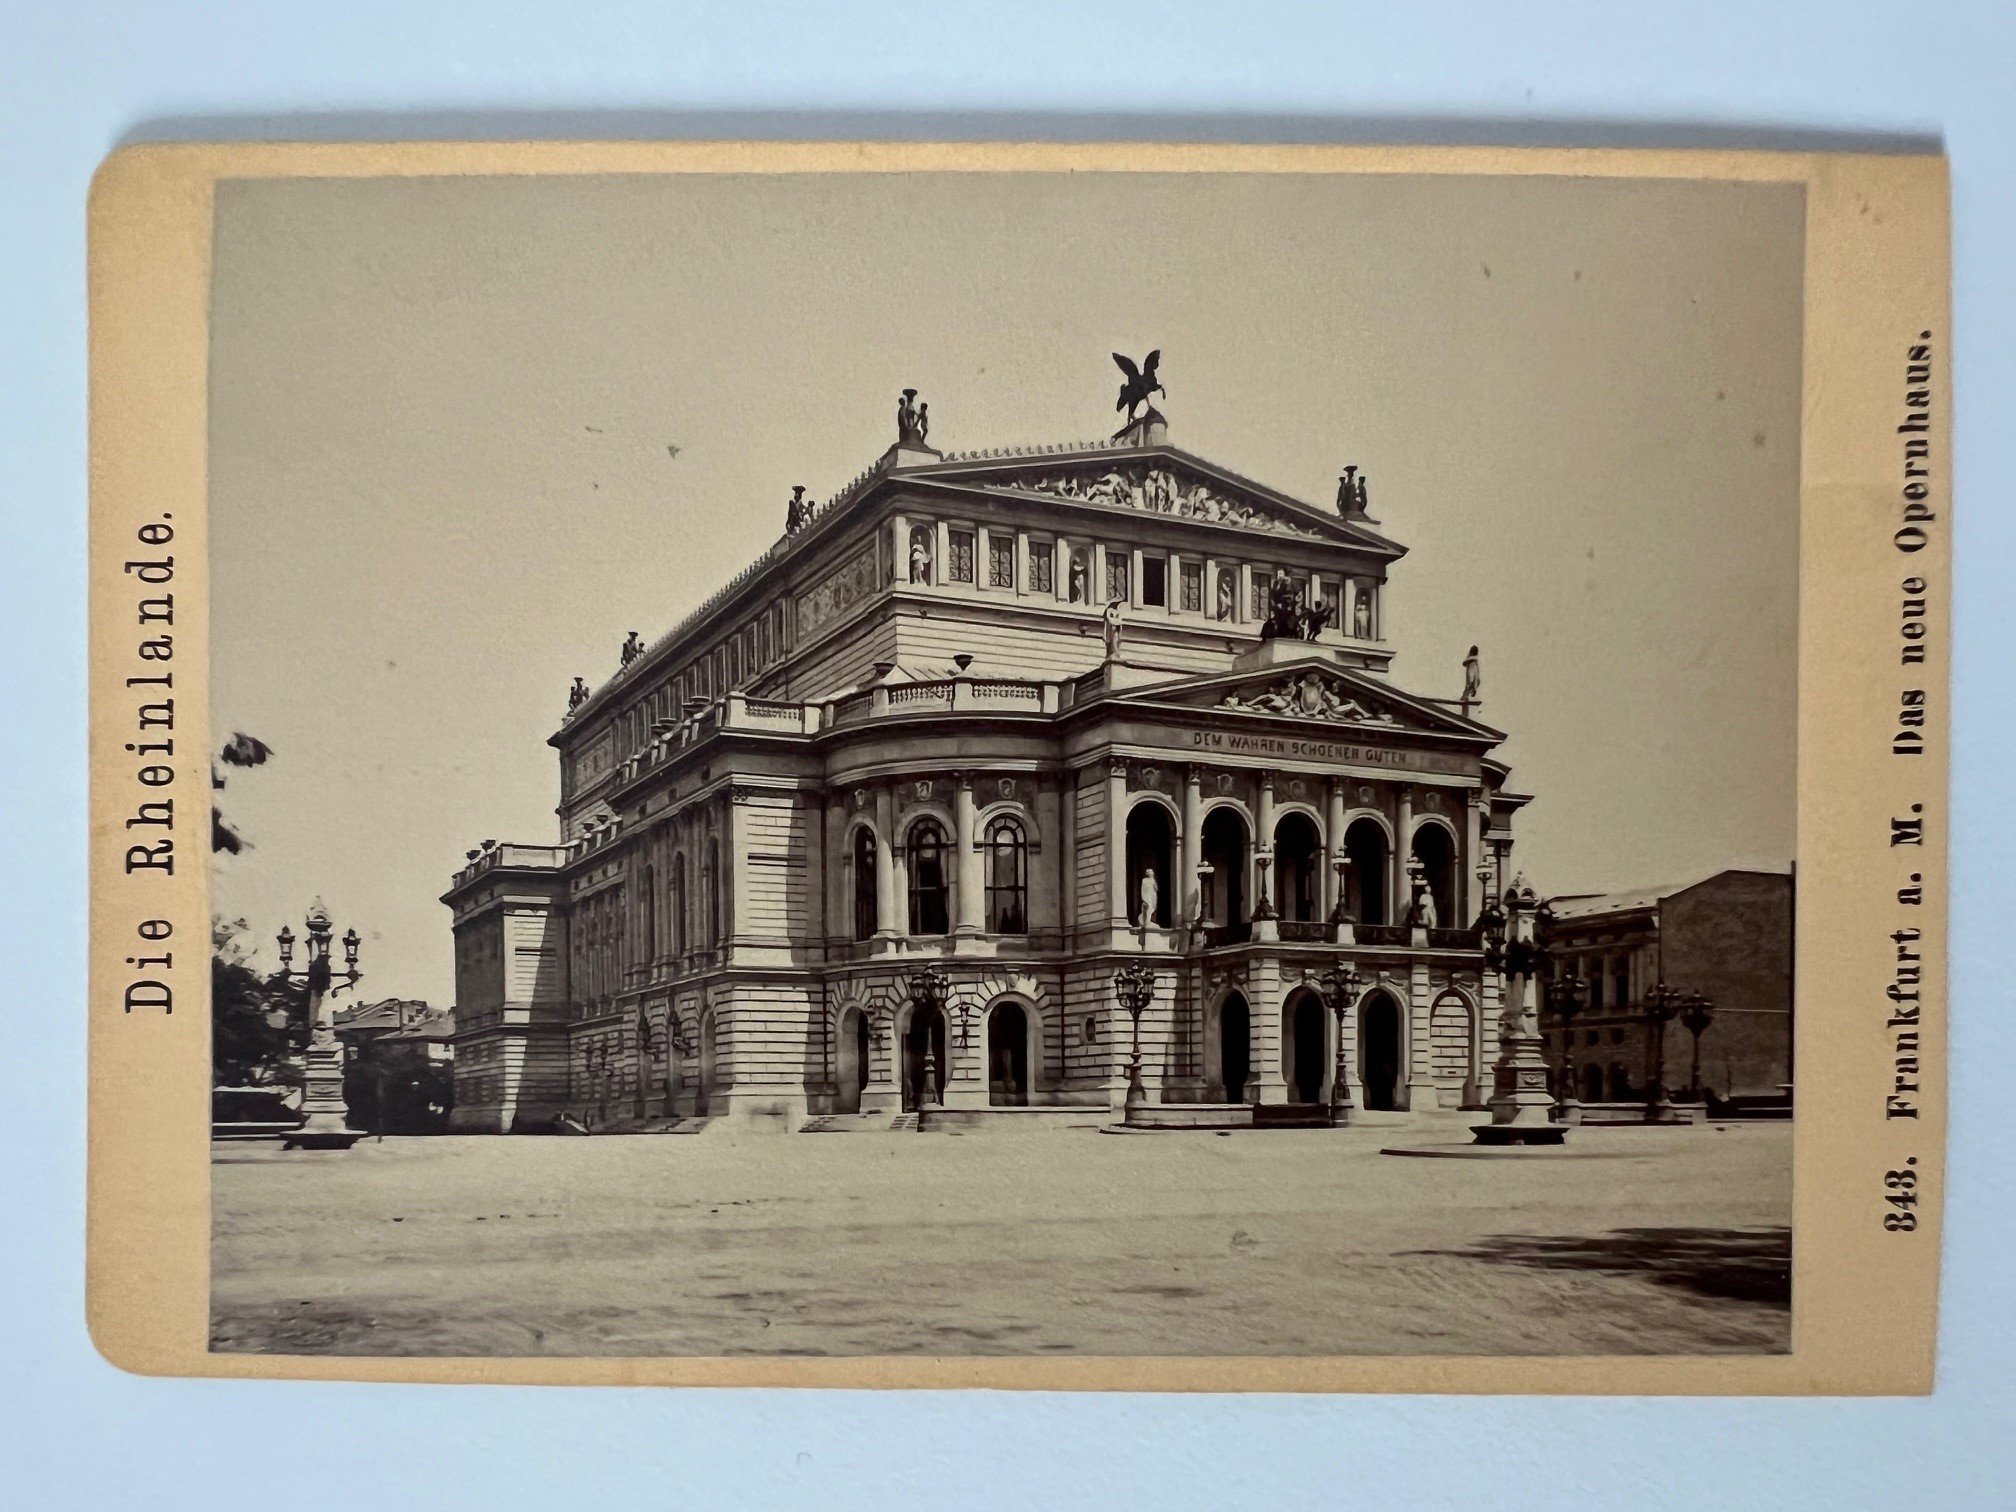 CdV, Sophus Williams, Frankfurt, Nr. 343, Das neue Opernhaus, ca. 1880. (Taunus-Rhein-Main - Regionalgeschichtliche Sammlung Dr. Stefan Naas CC BY-NC-SA)